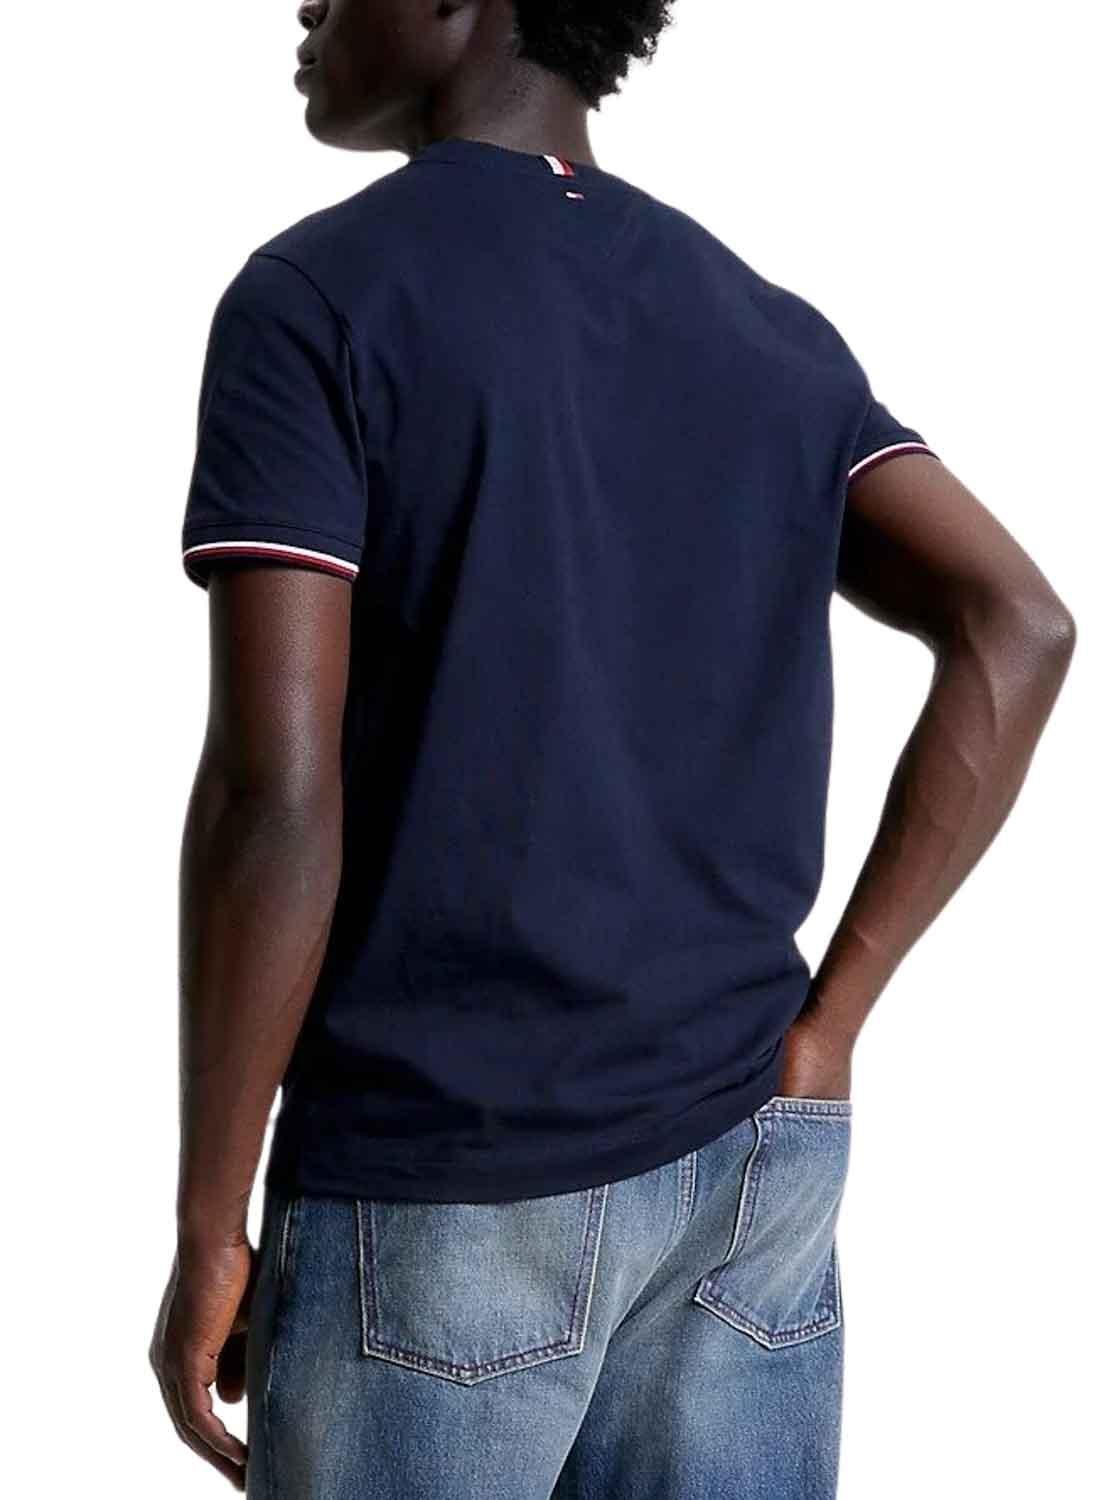 T-Shirt Tommy Hilfiger Tipped Blu Navy per Uomo